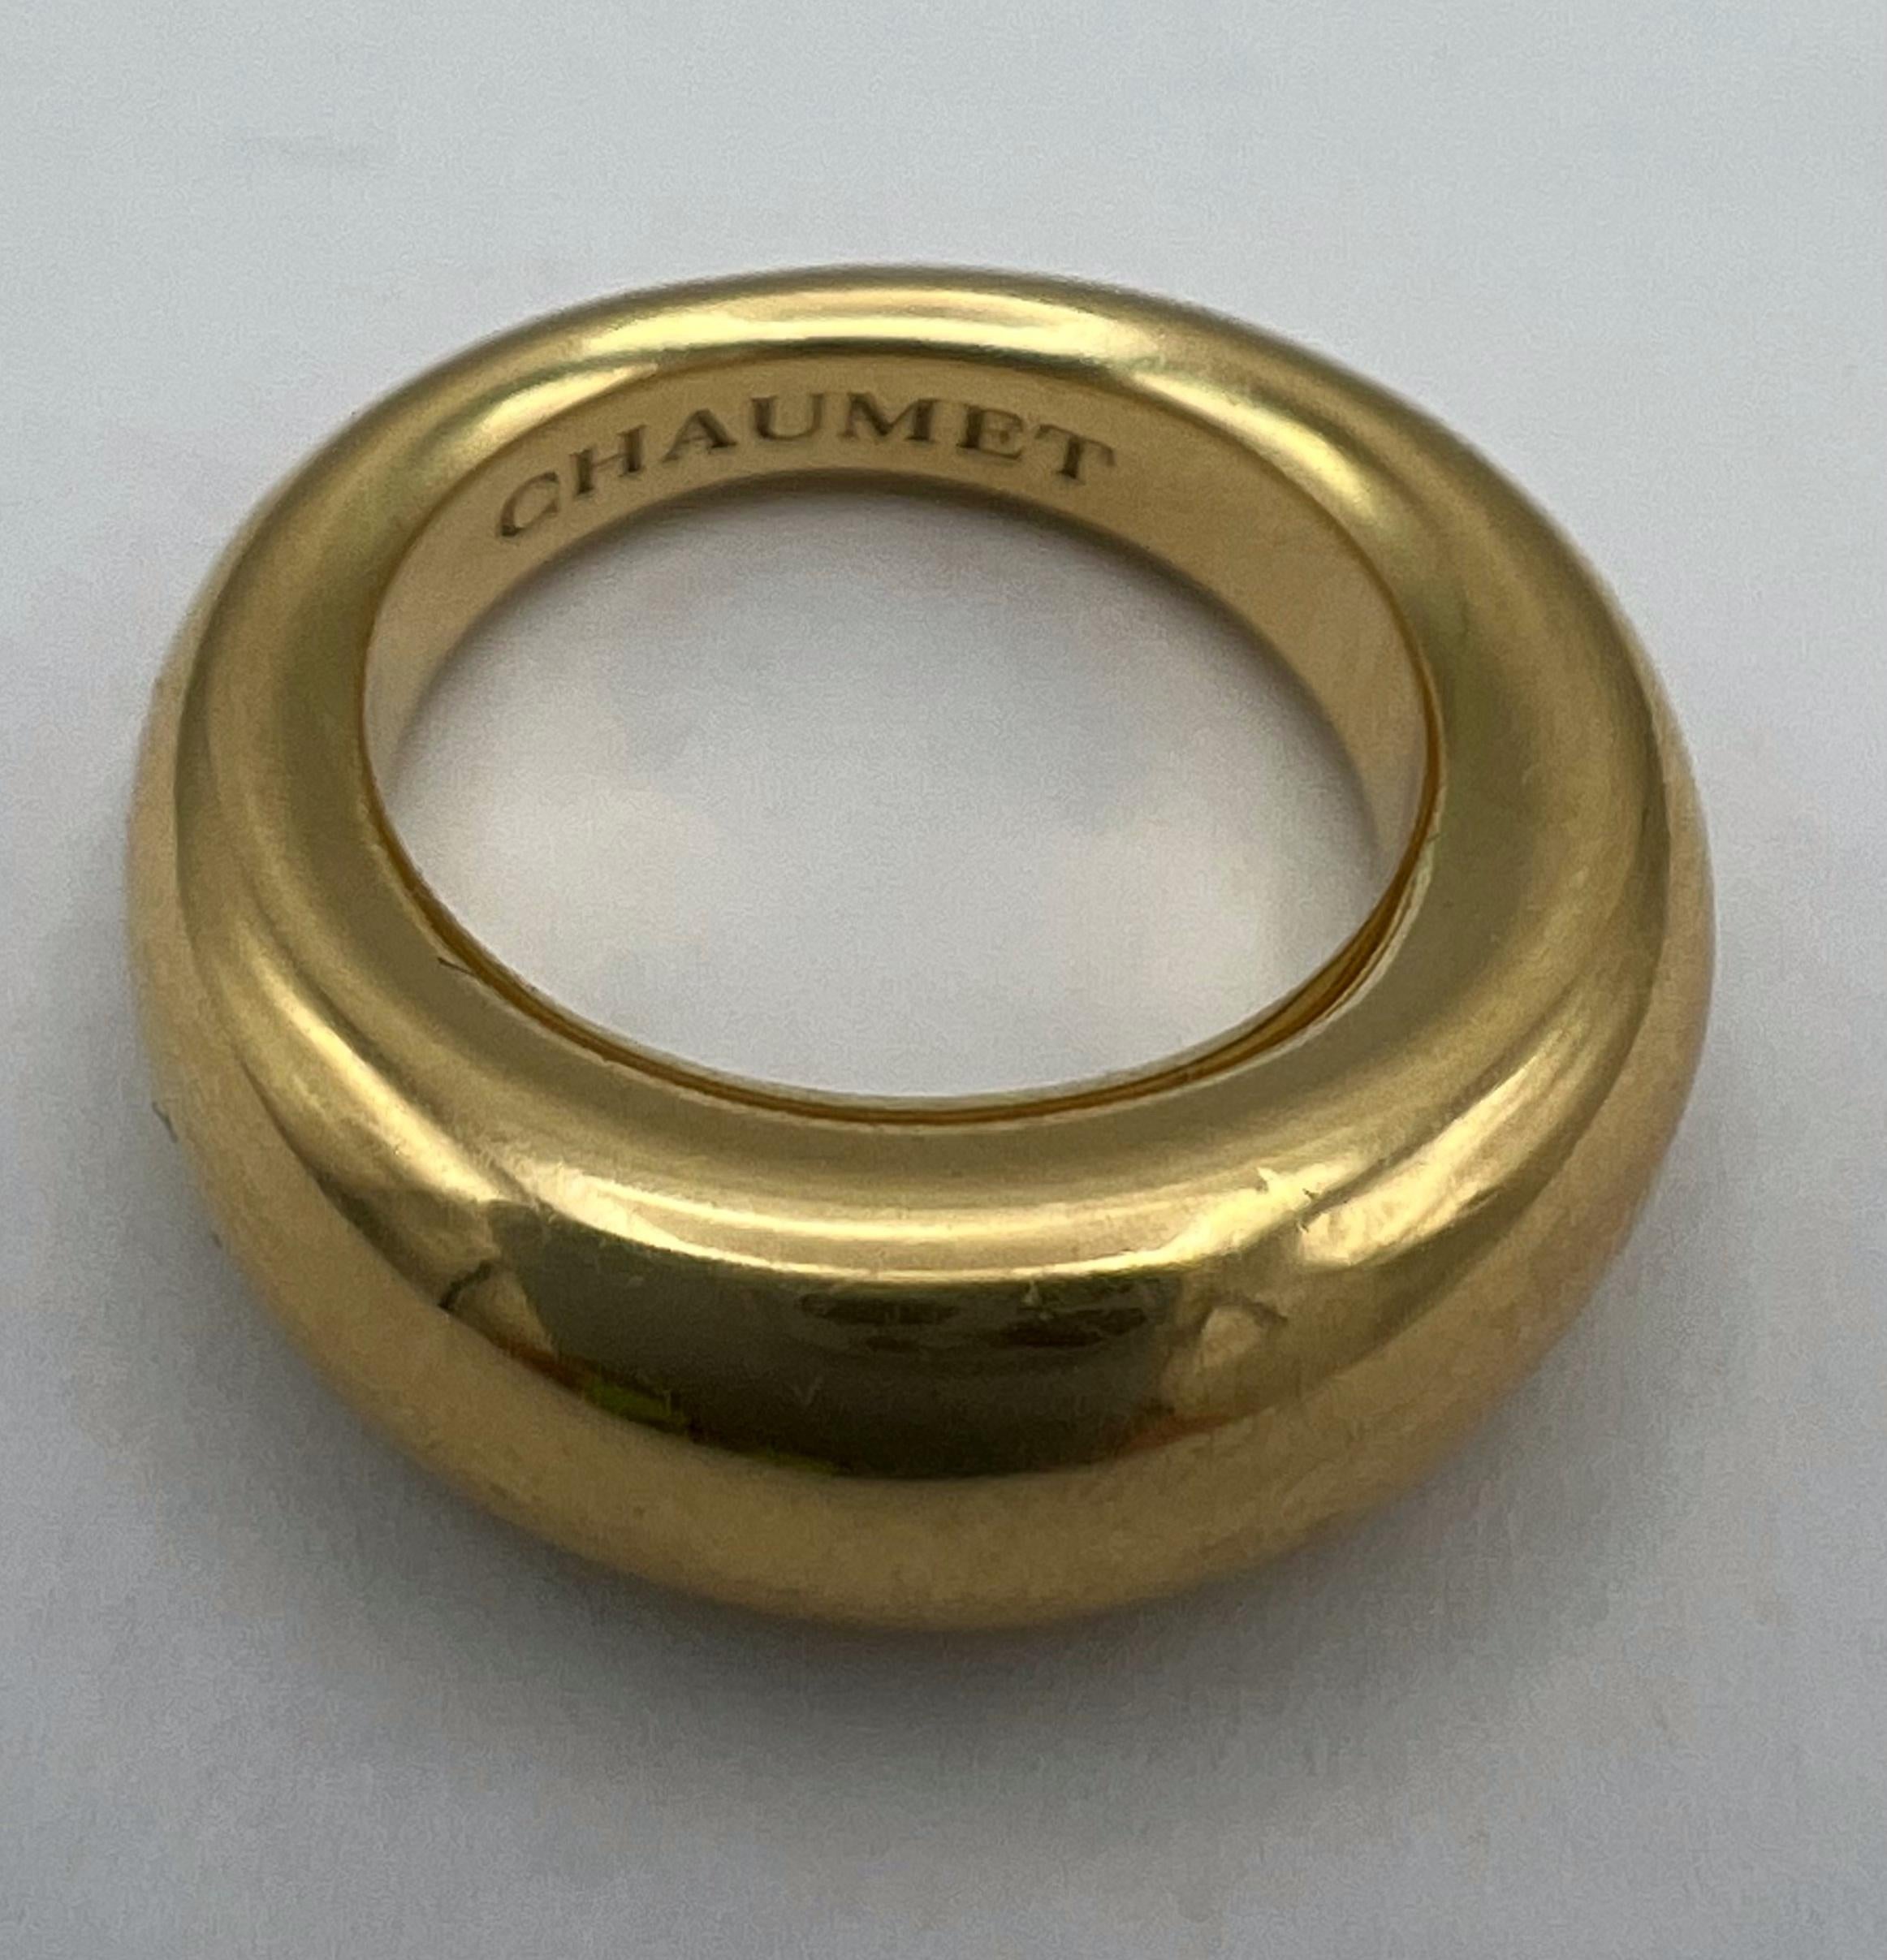 Chaumet Paris 18k Gold Band Ring 1